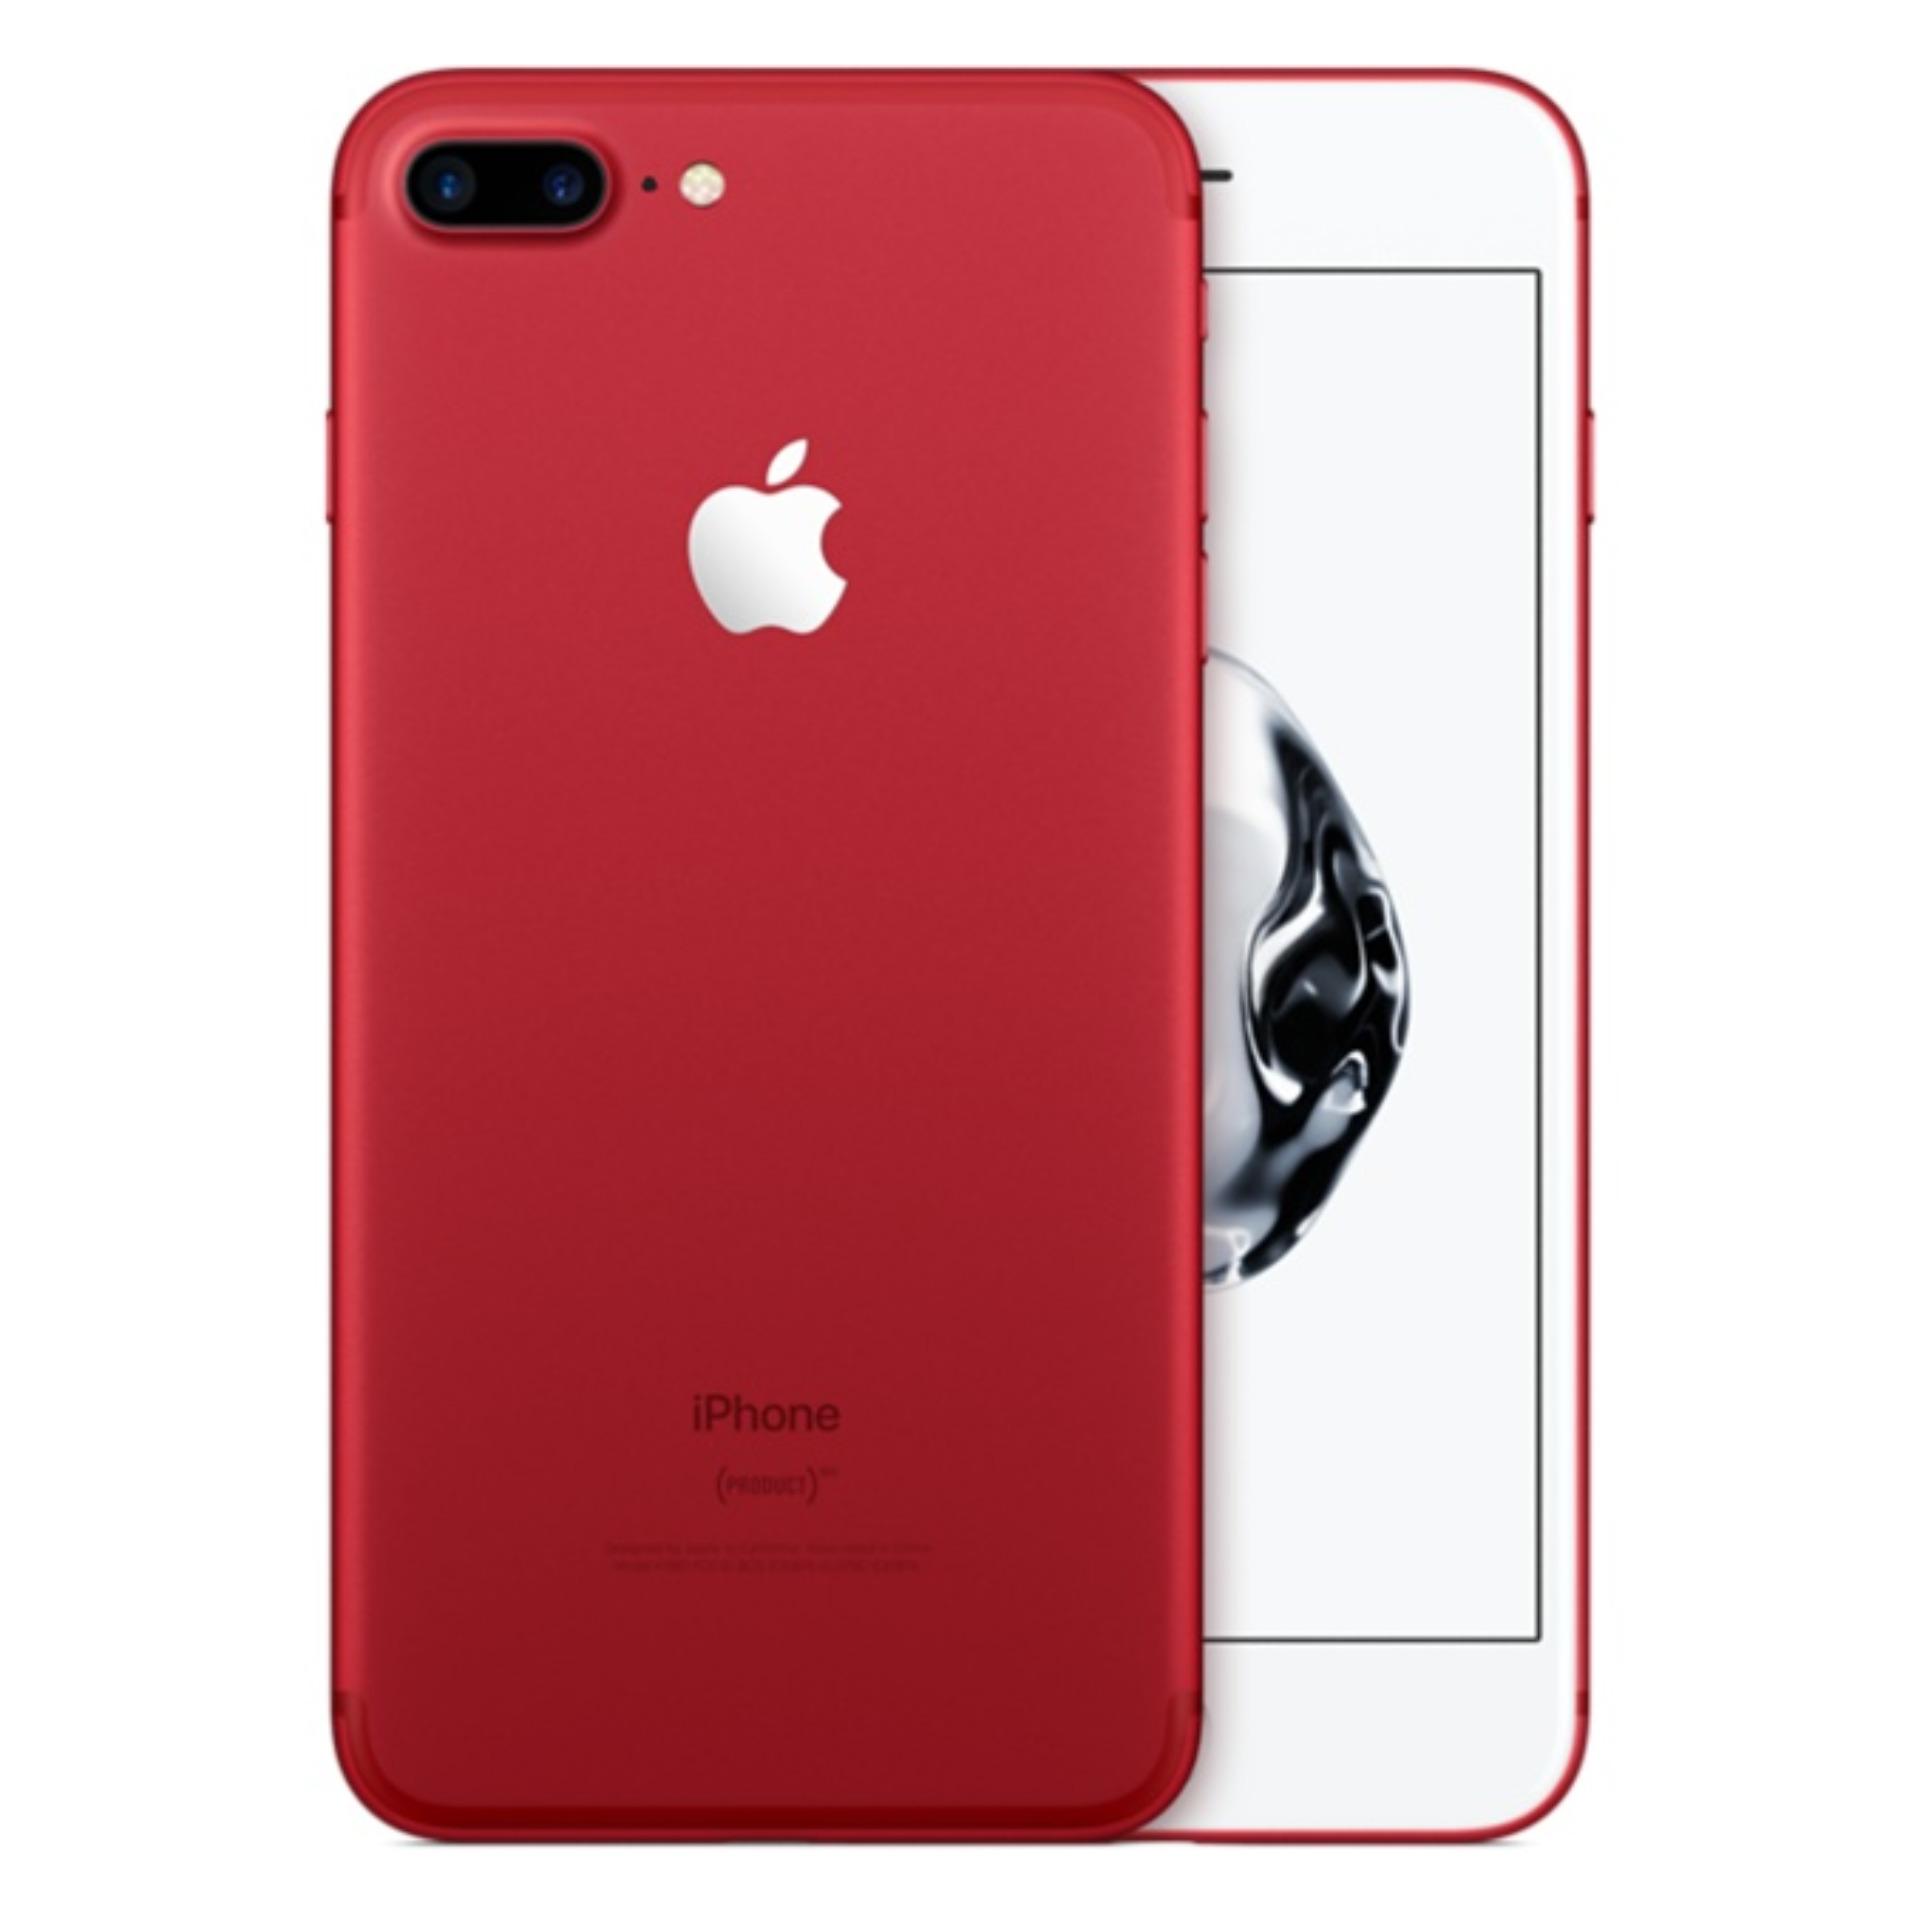 Refurbish Apple iPhone 6 64 GB RED - Bisa Cicilan tanpa Kartu Kredit